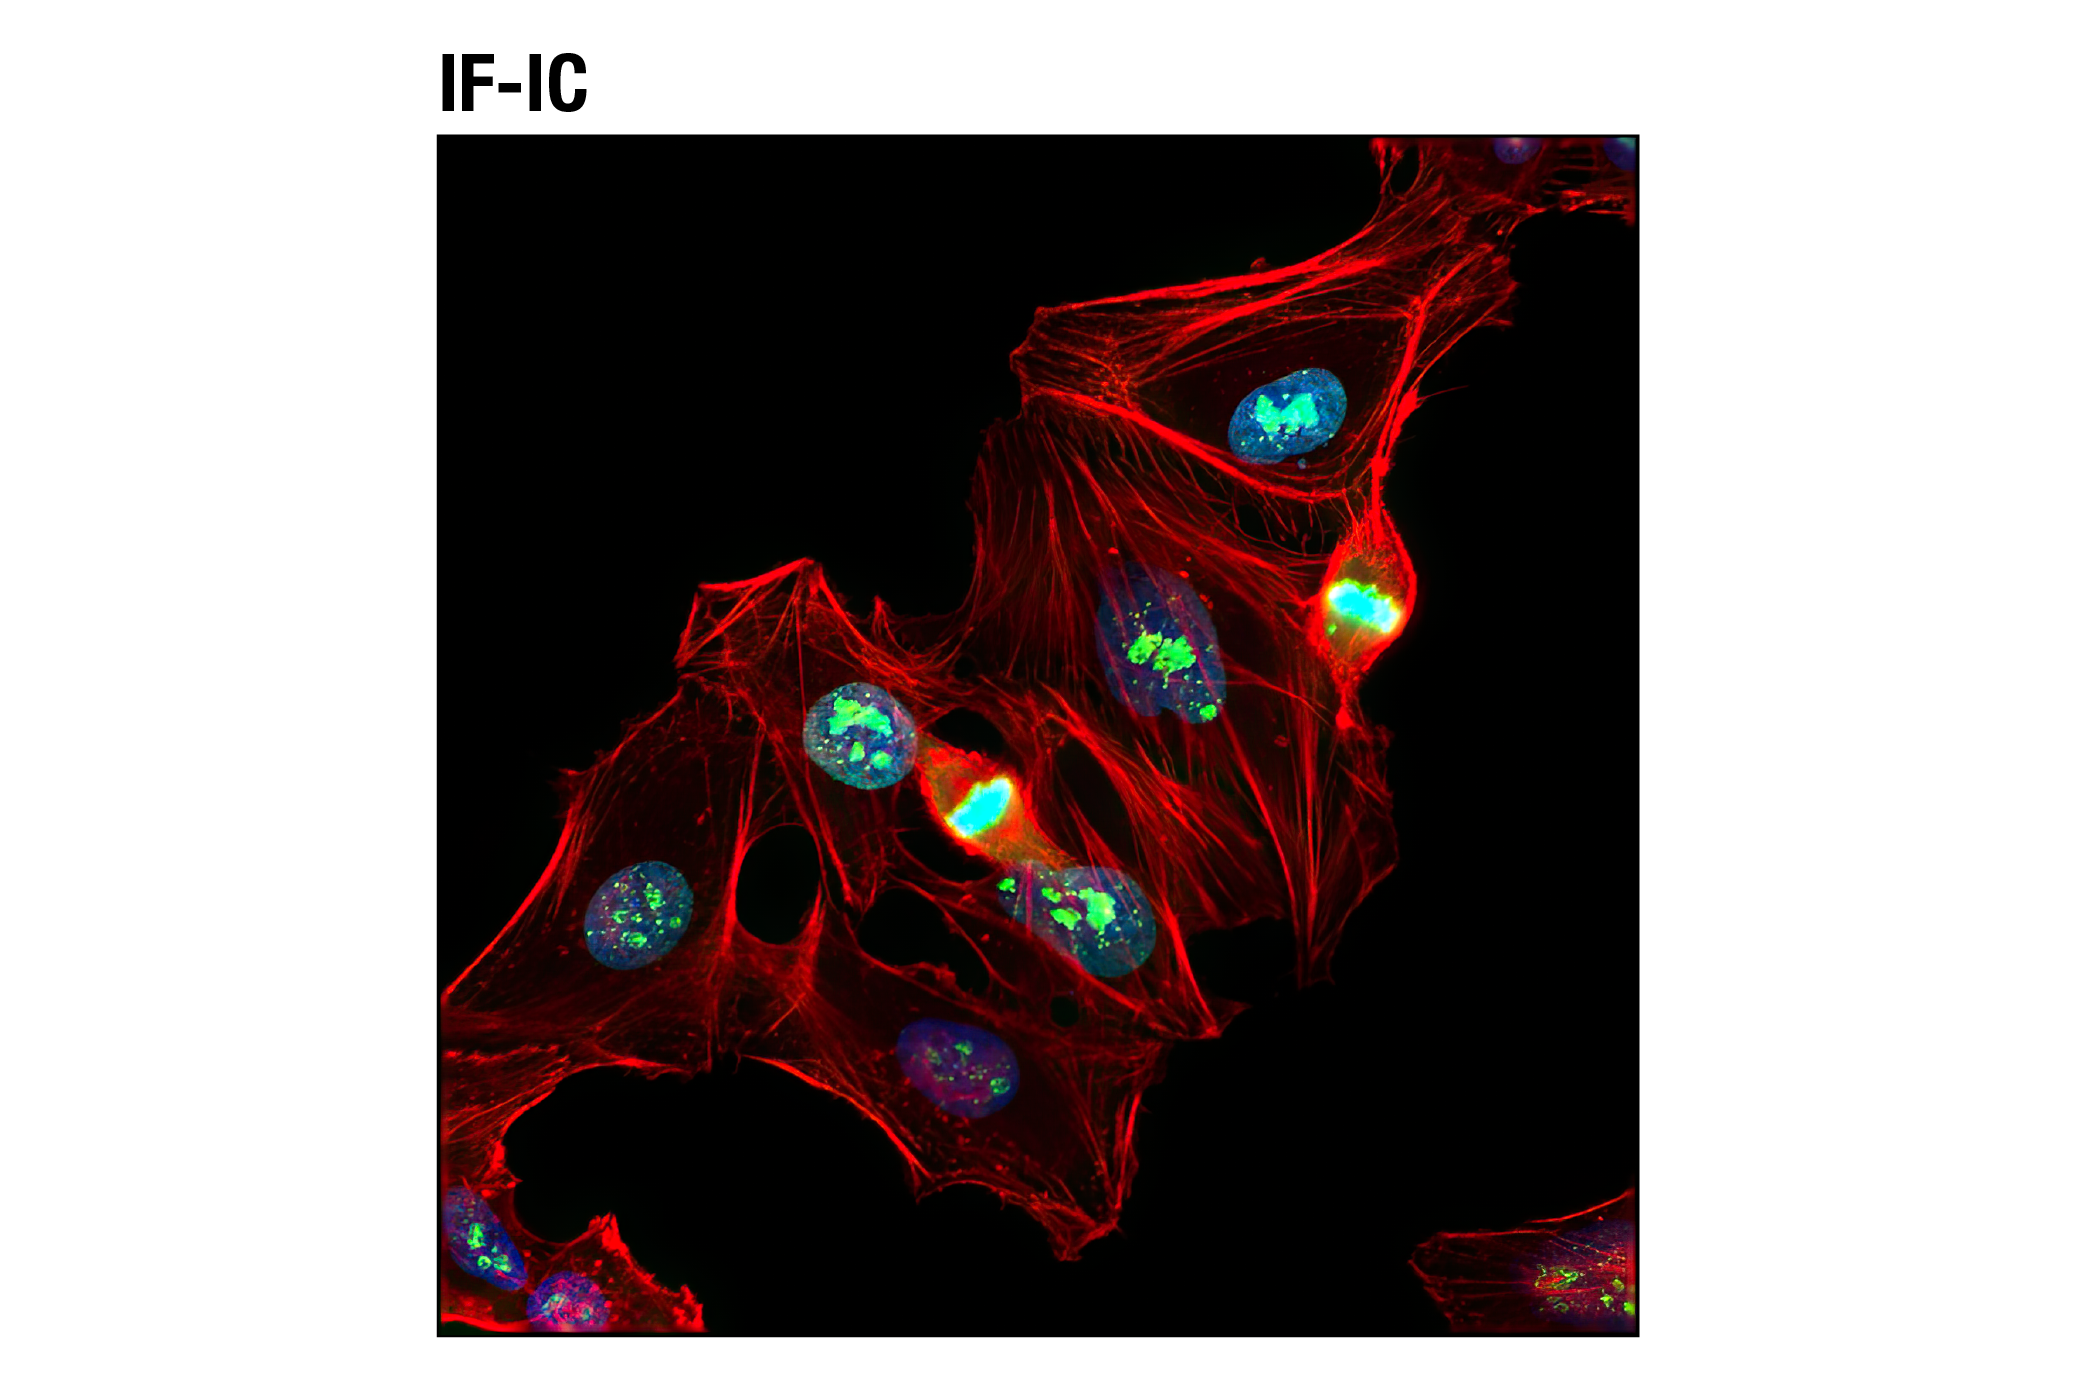  Image 22: Mouse Microglia Marker IF Antibody Sampler Kit